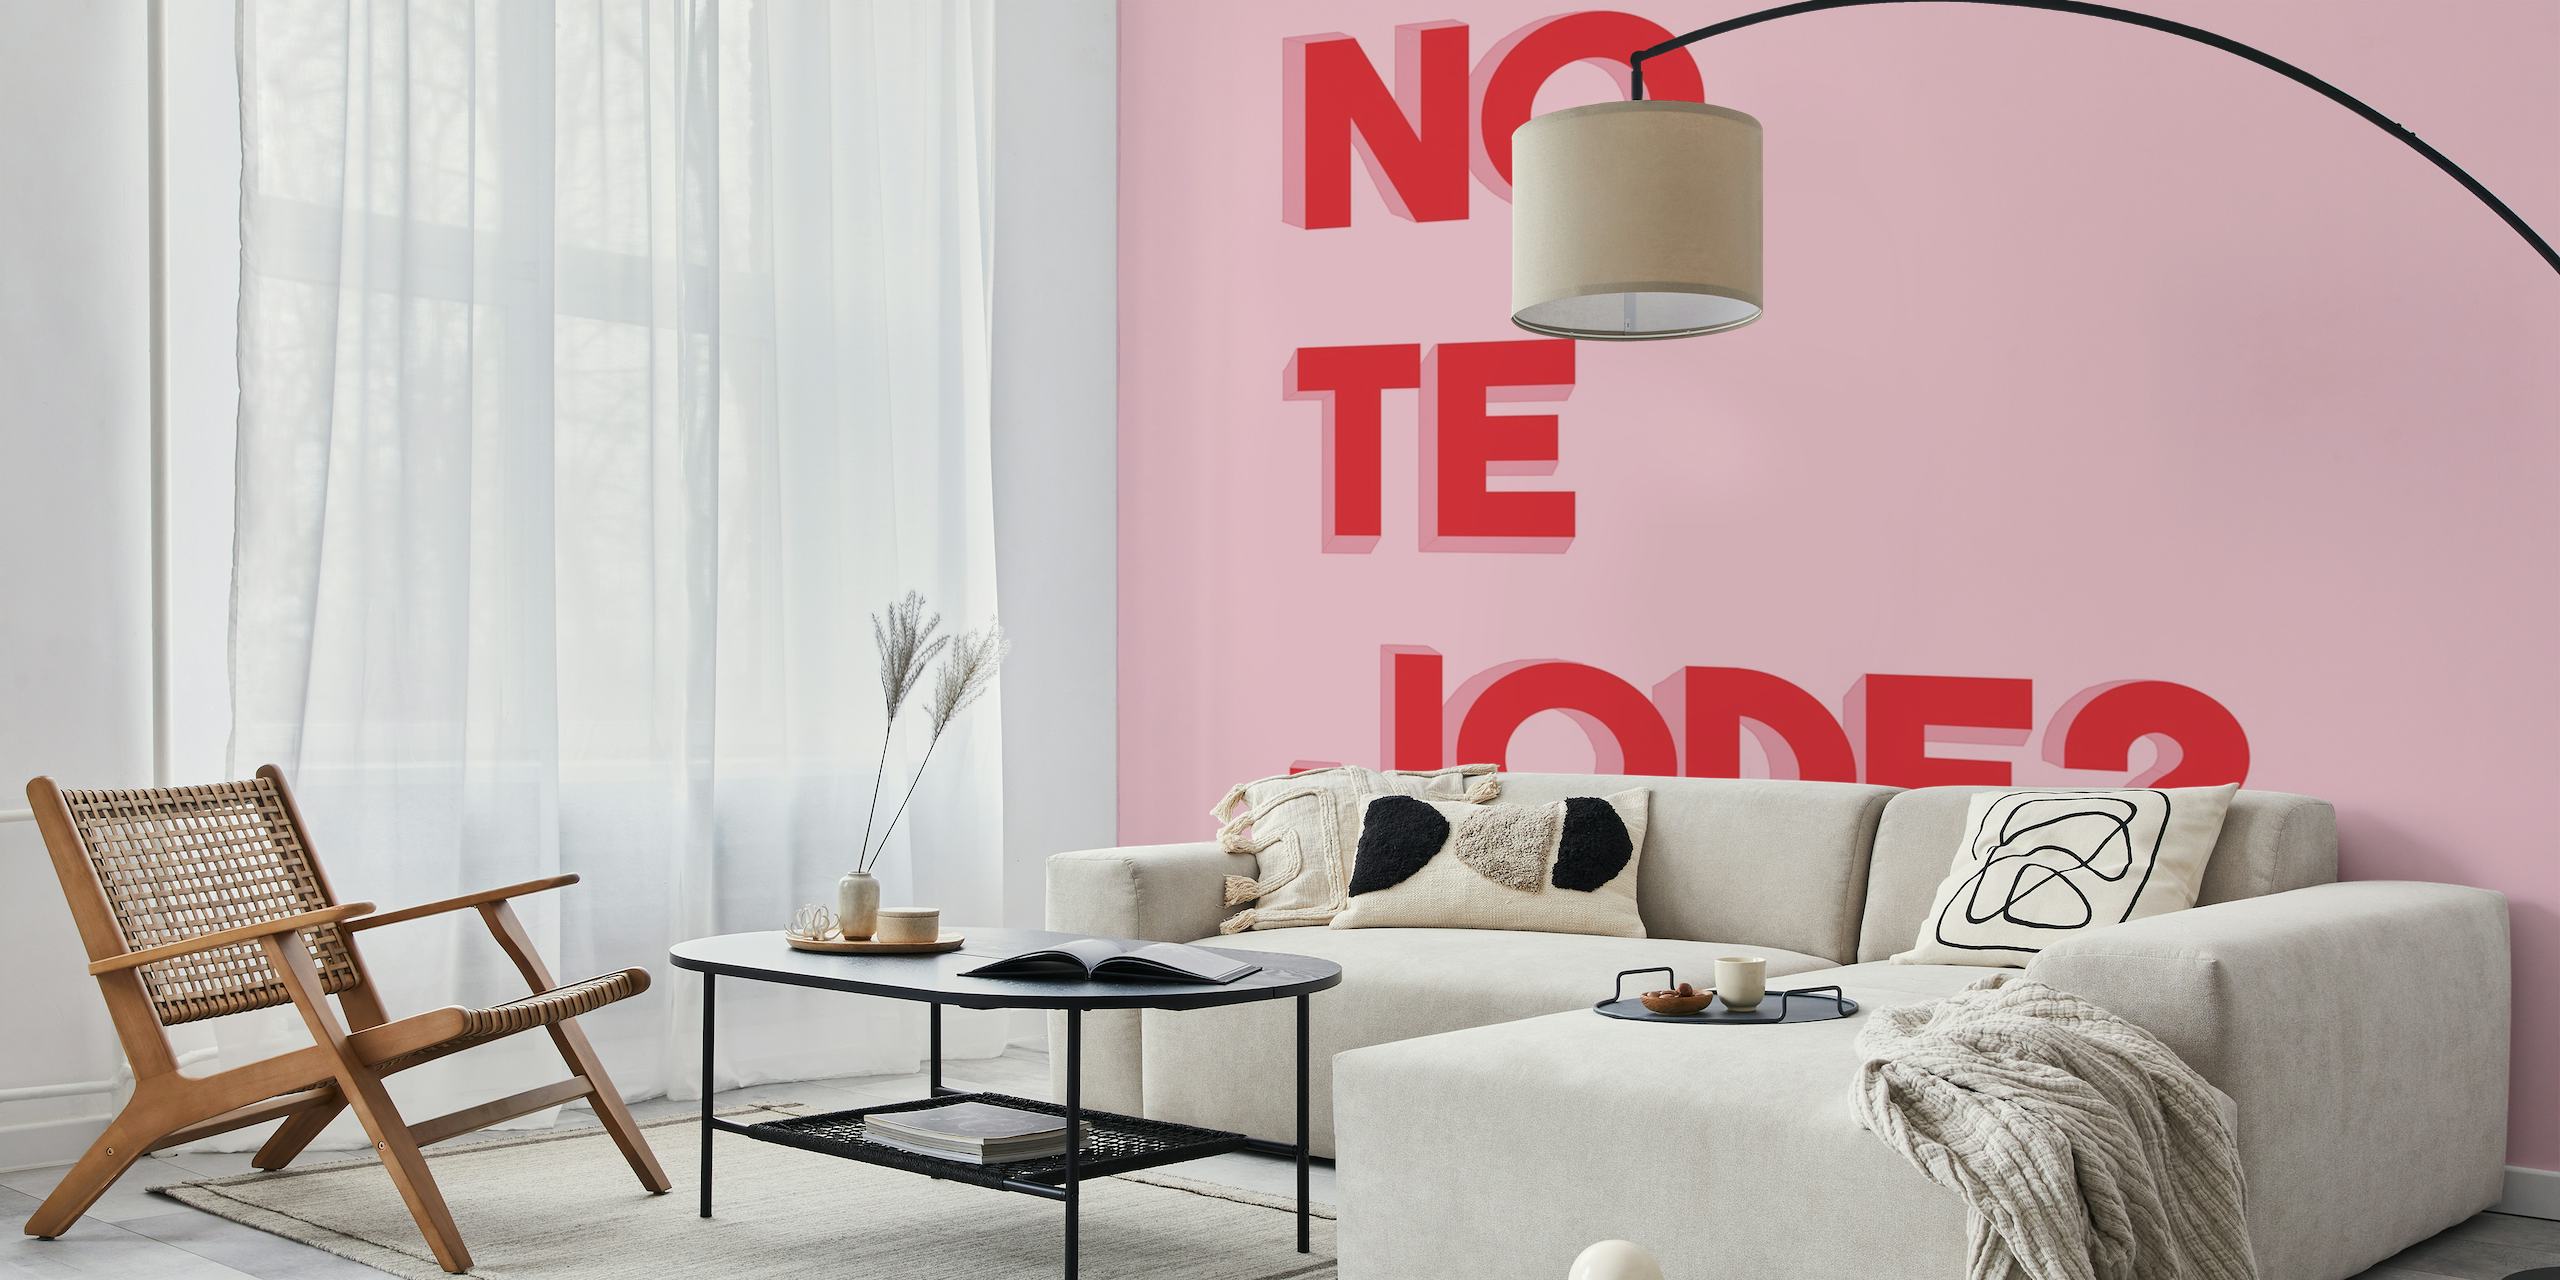 Fet rød tekst 'No te jode?' på et rosa veggmaleri